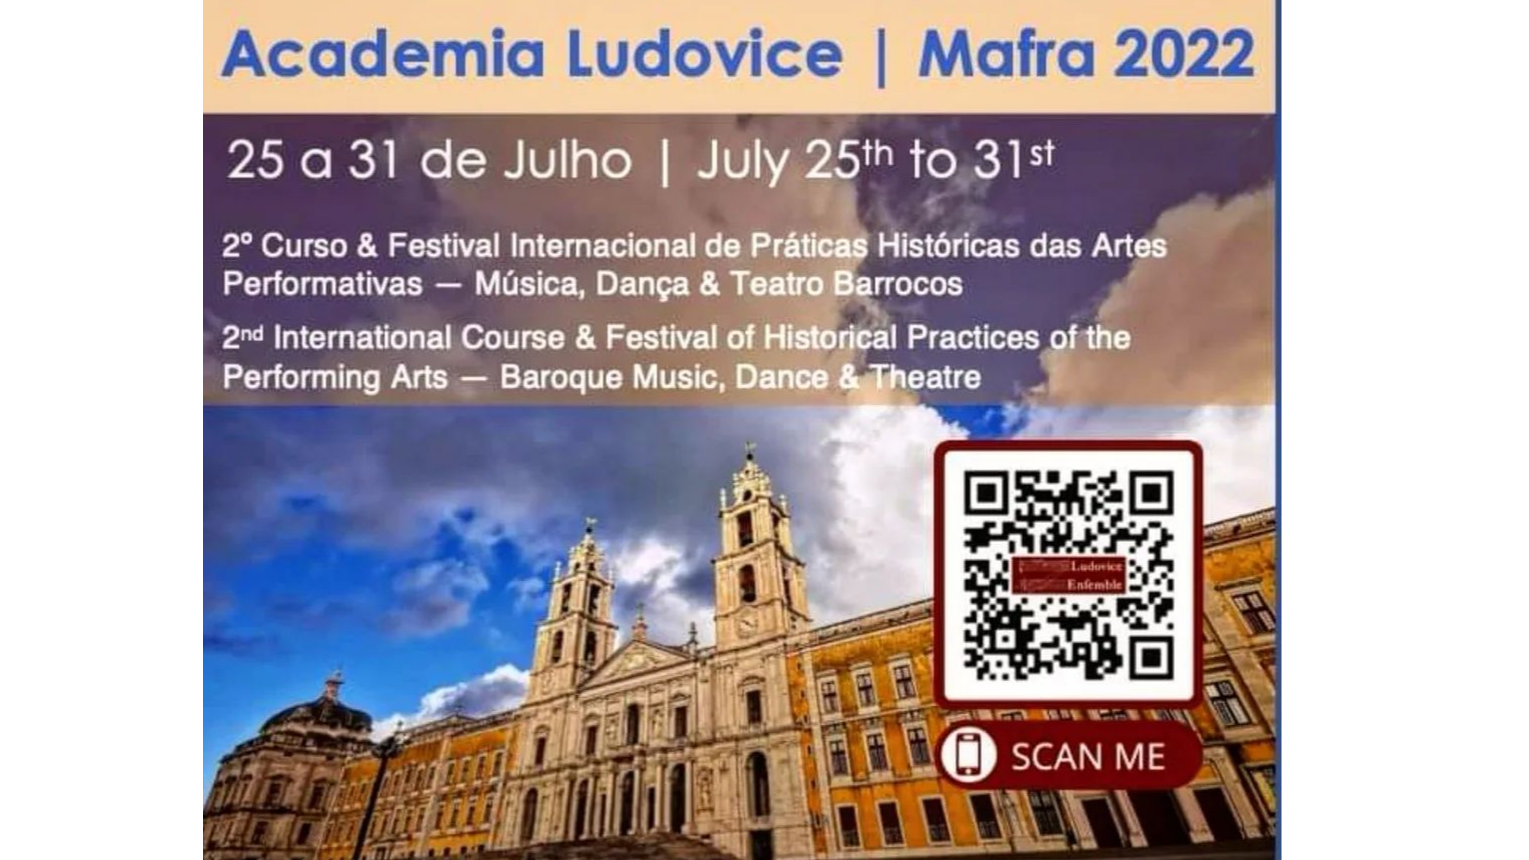 Academia Ludovice - Mafra 2022